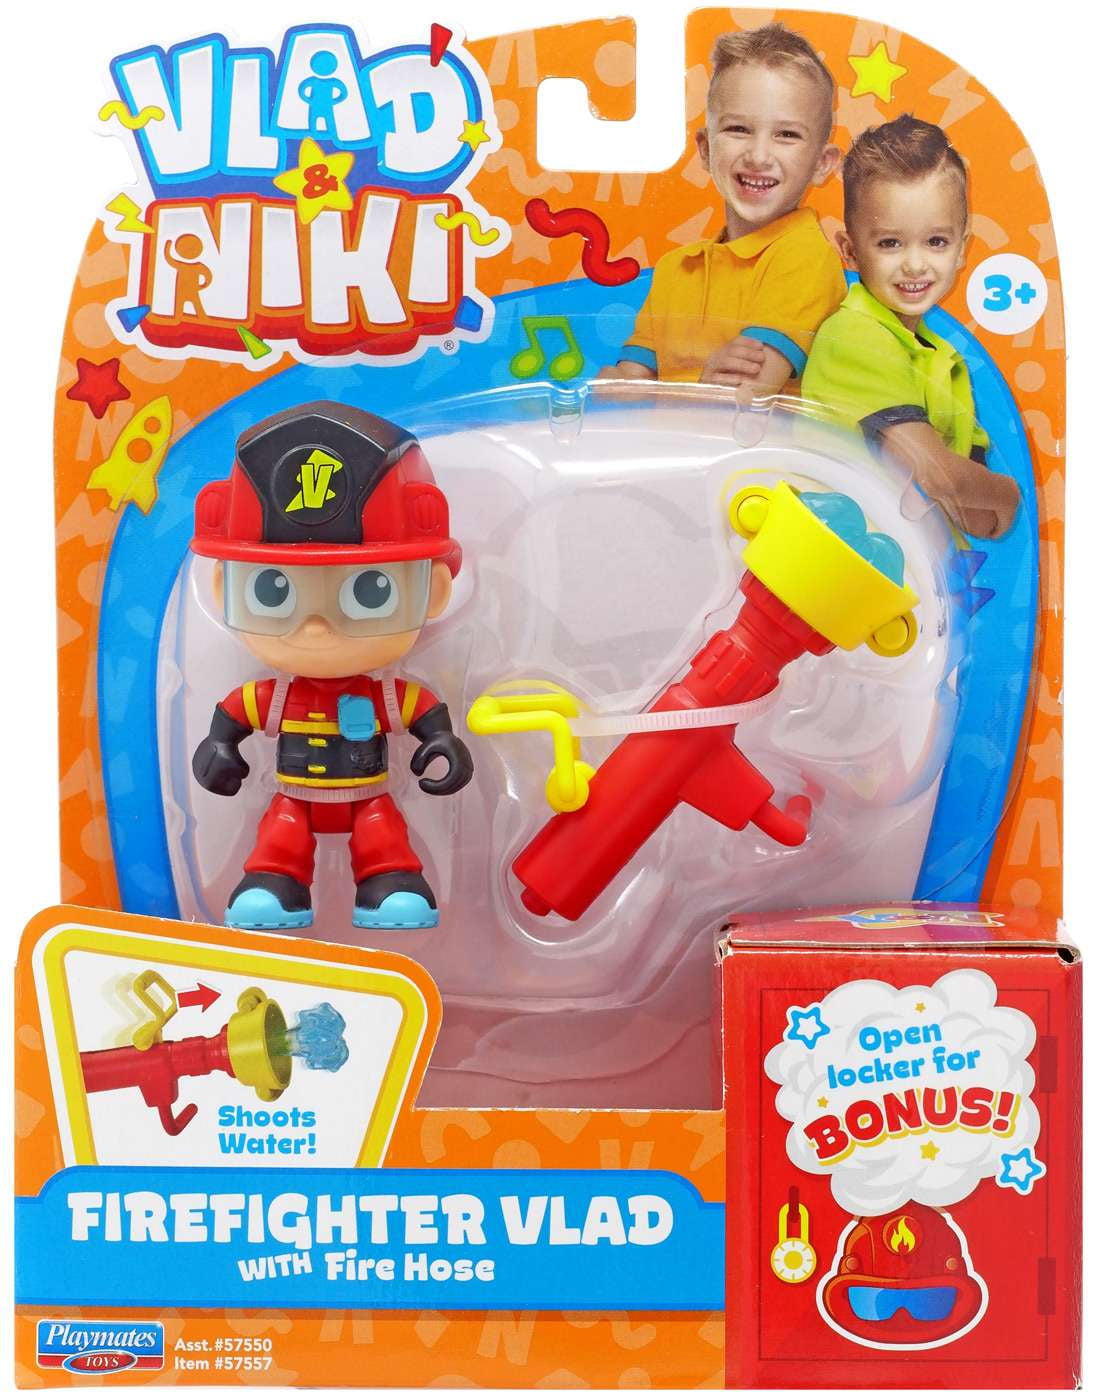 Vlad And Niki Firefighter Vlad Figure Set With Firehose